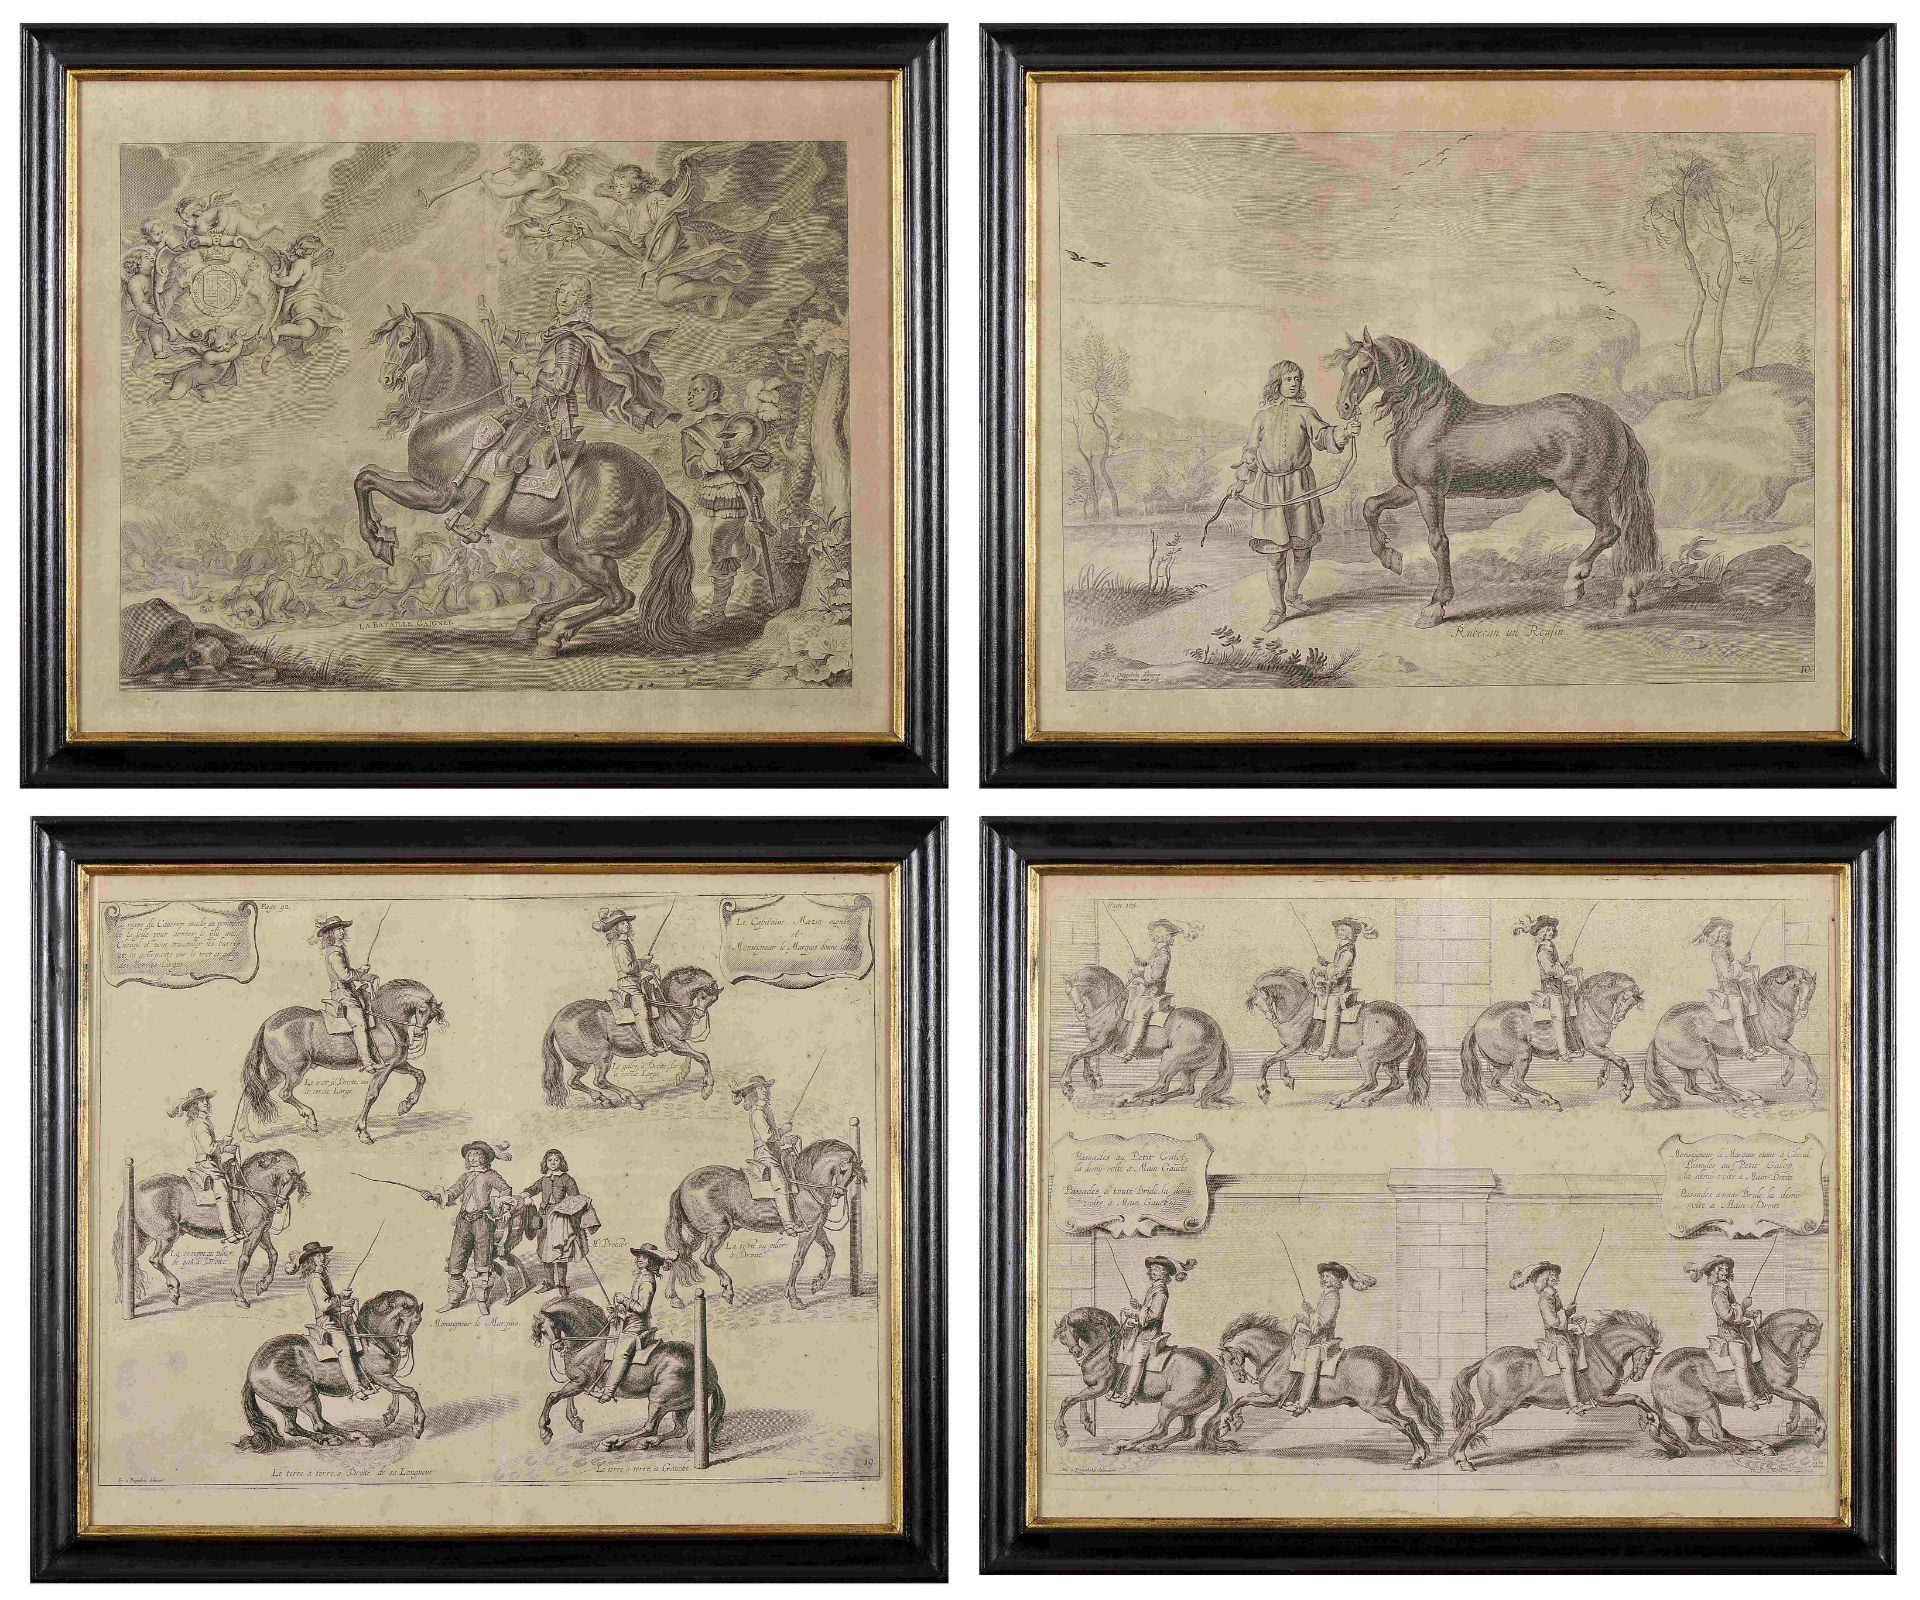 ENGRAVINGS - NEWCASTLE, William Cavendish, 1st Duke of.- four prints of the work “Methode et inventi